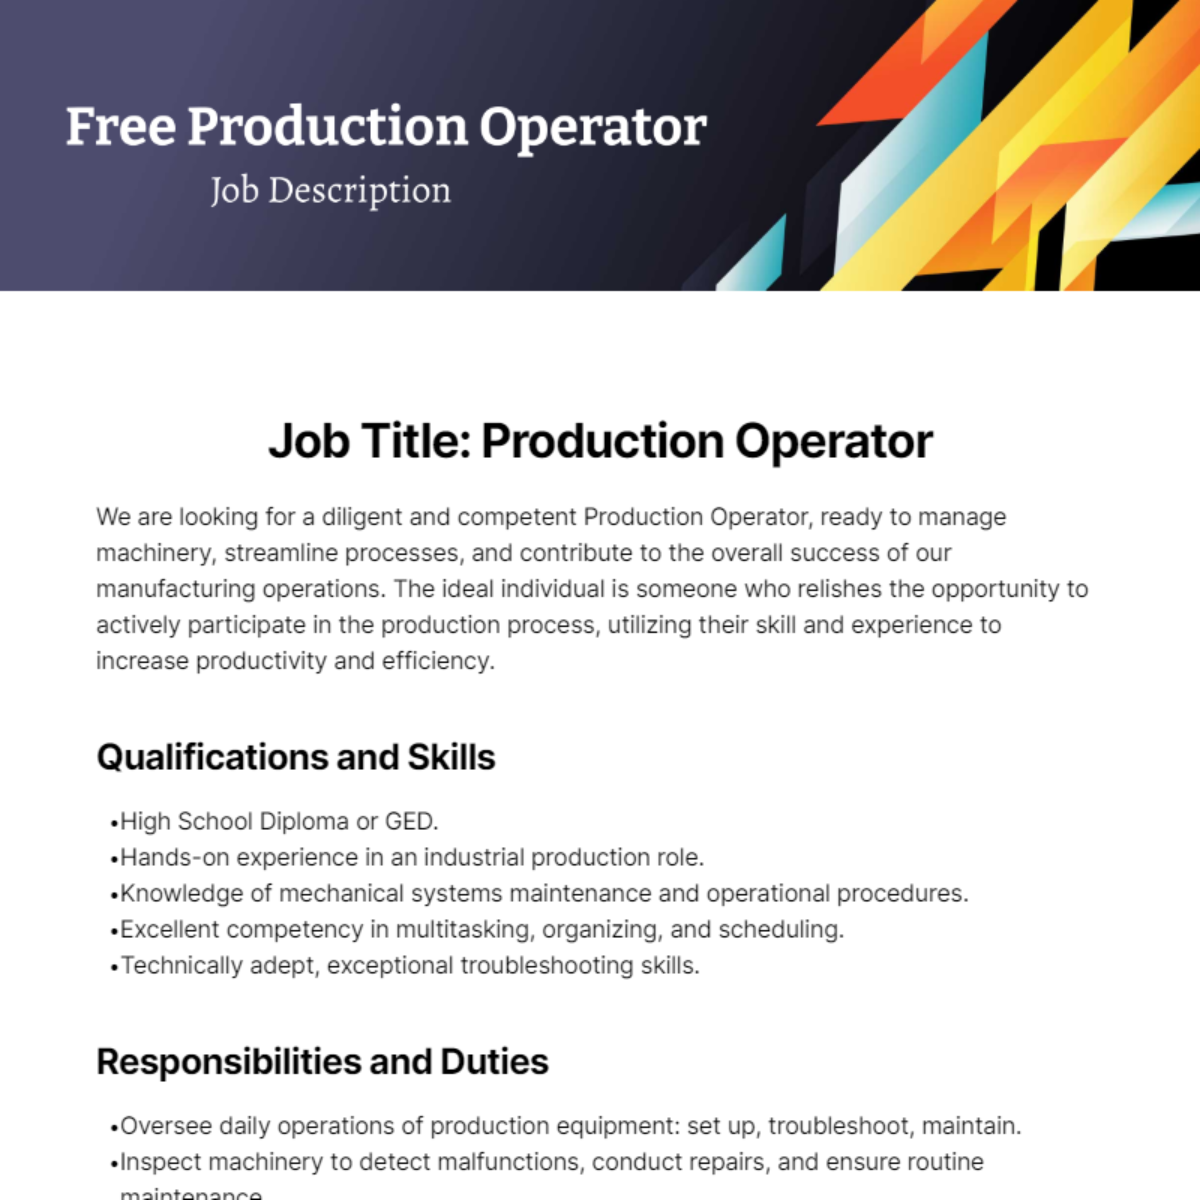 Free Production Operator Job Description Template